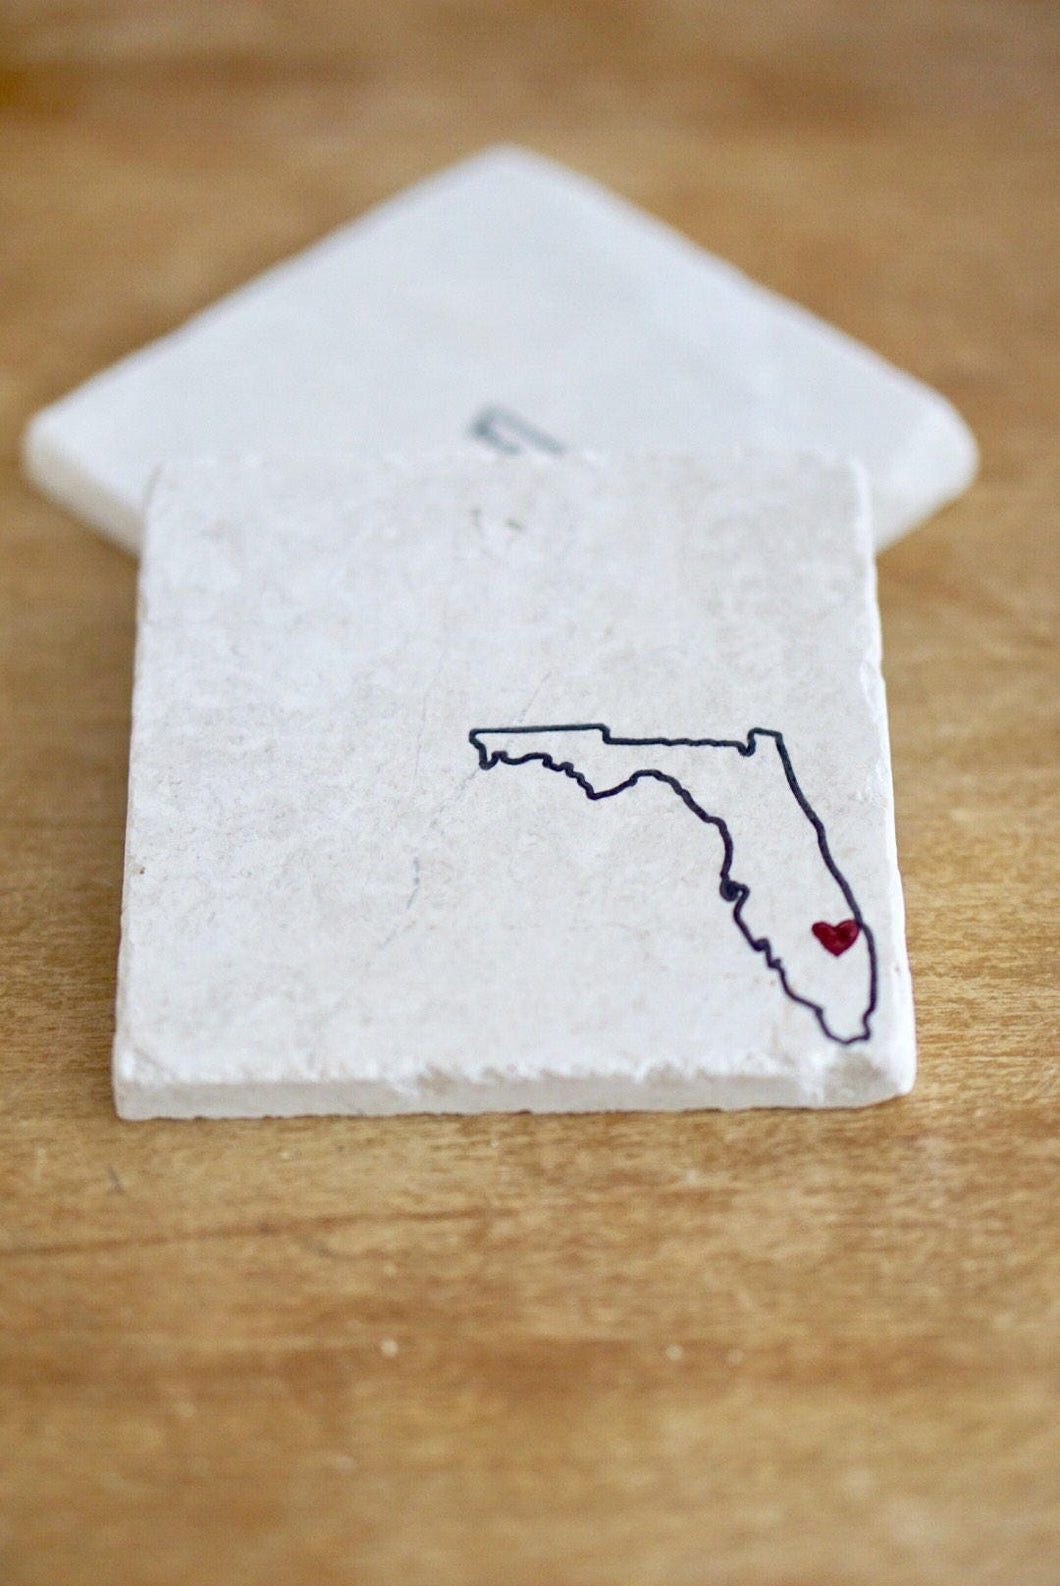 Florida Home/ Florida Marble Coasters/Florida Love/ Florida Heart/ Florida Gift/ Stone Coasters/ personalized coasters/ stone coasters/ tile